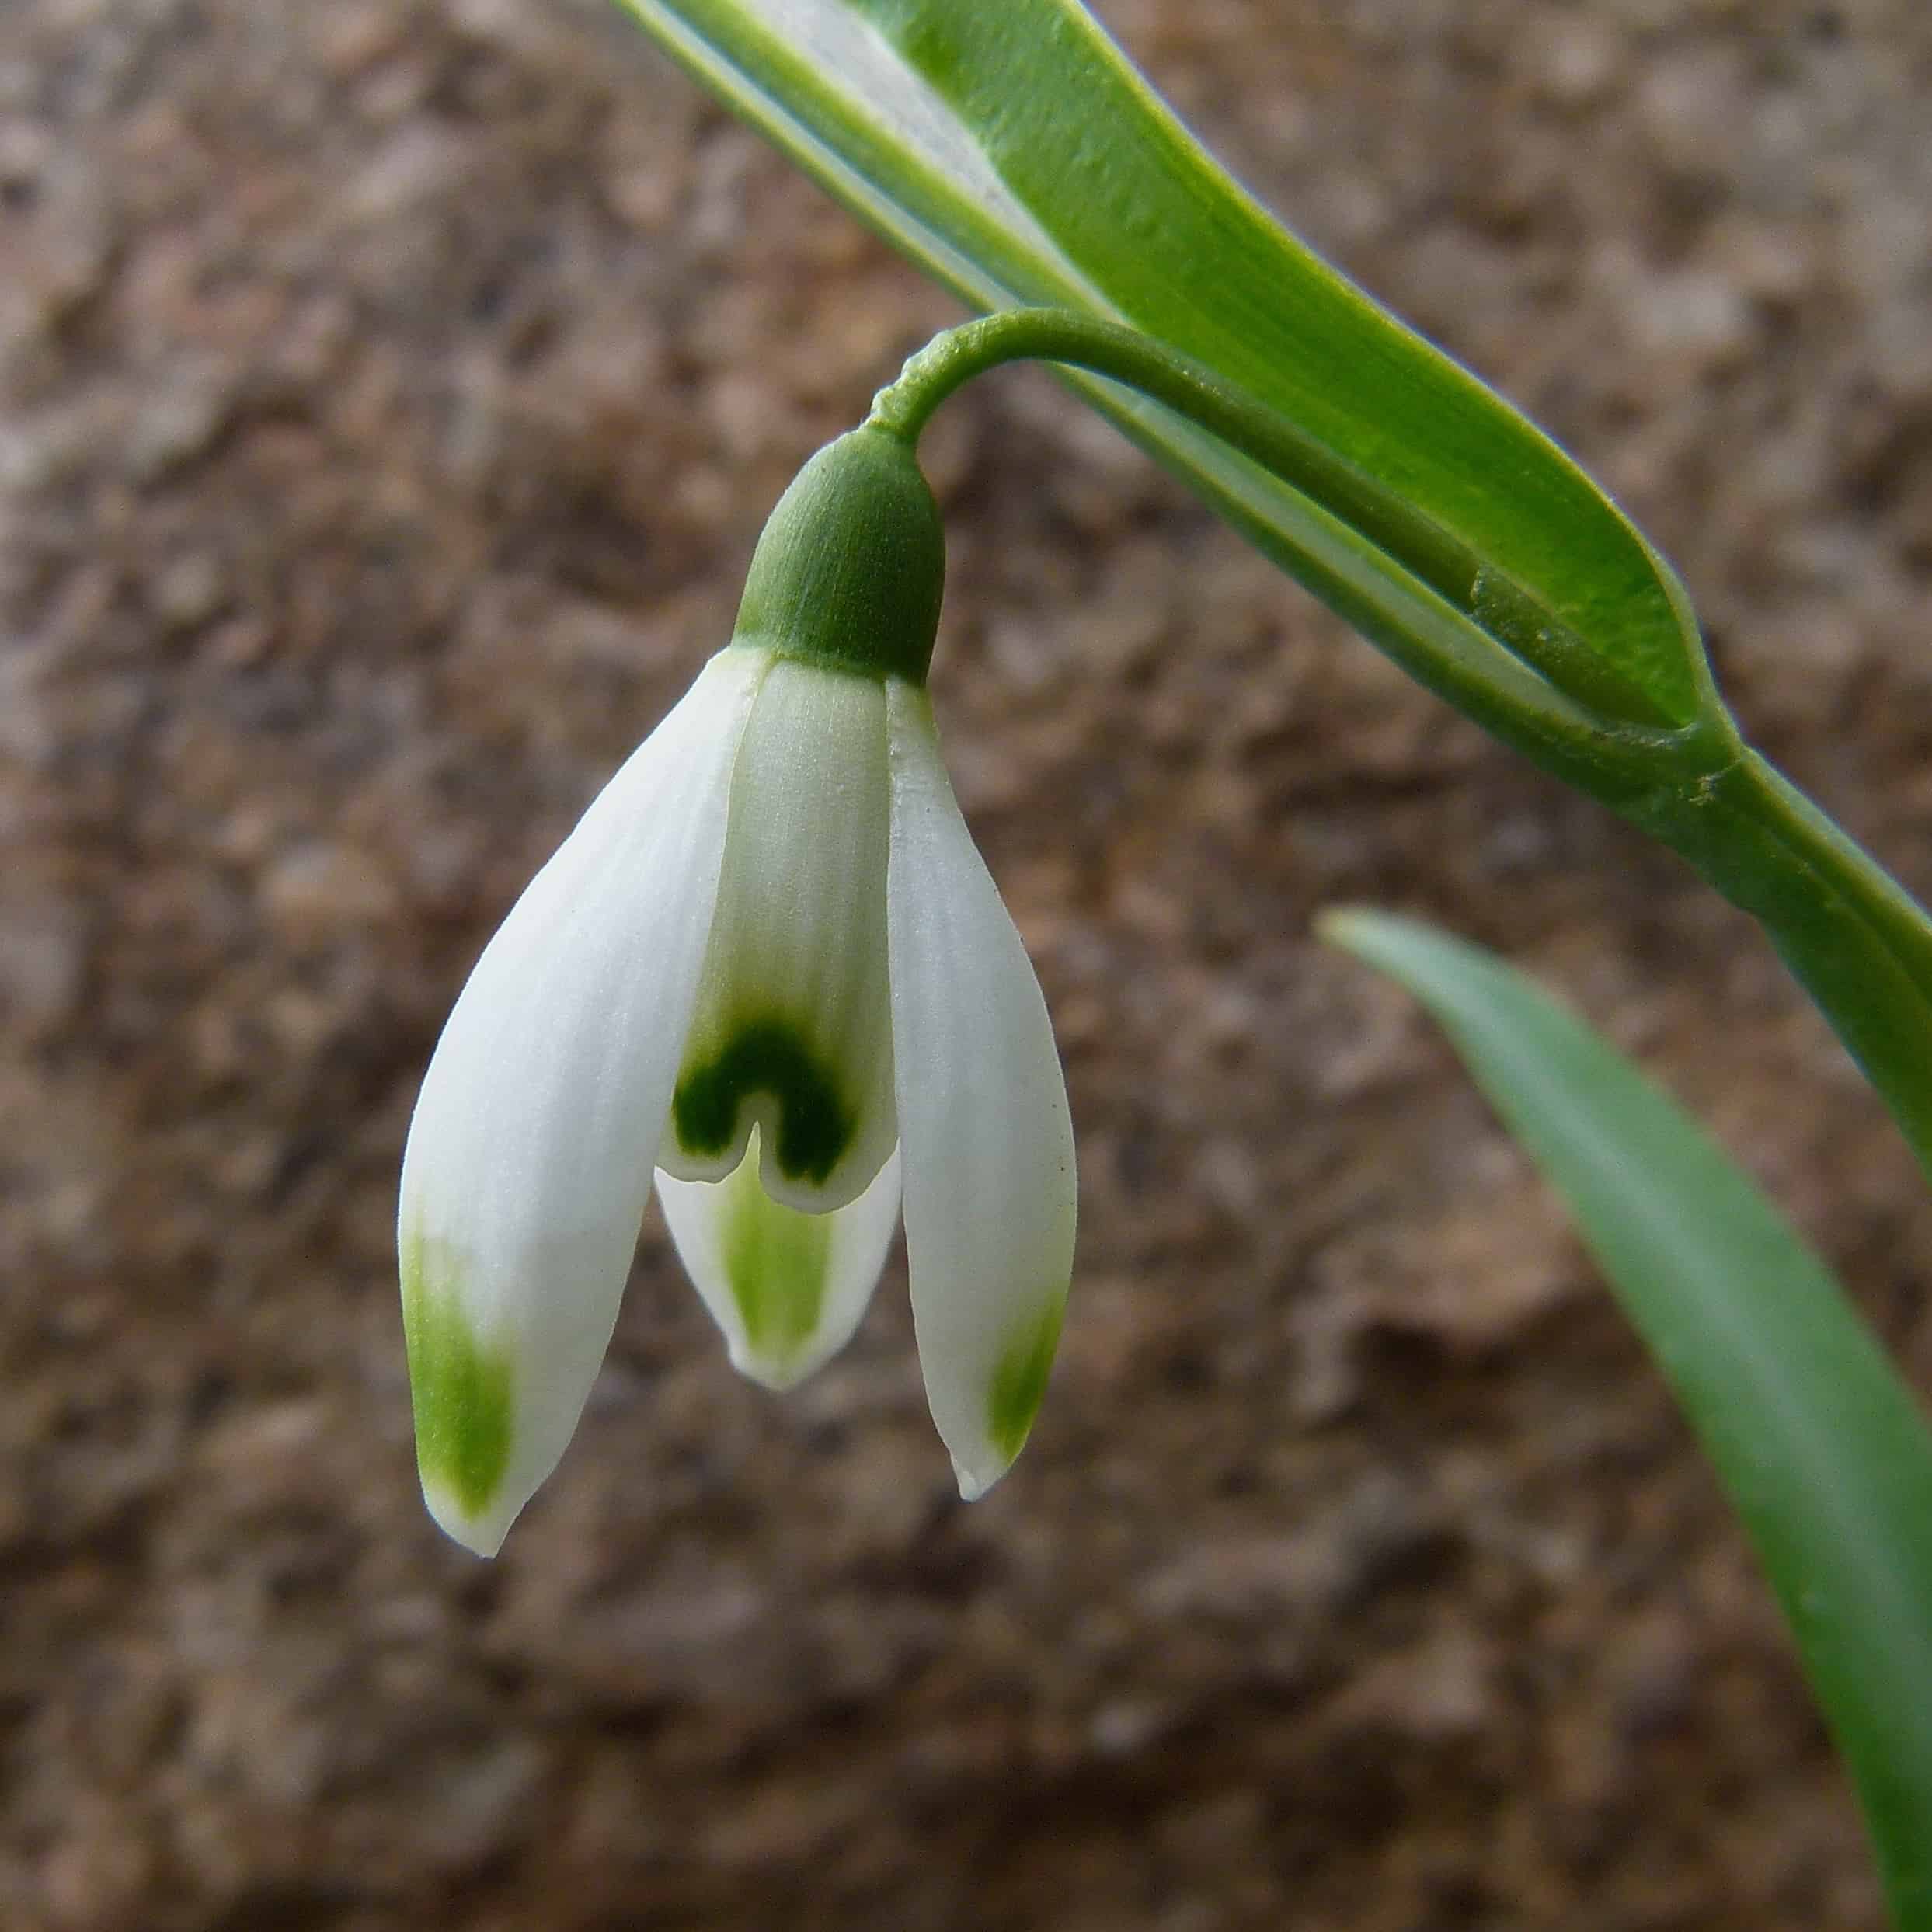 Close up of snowdrop flower